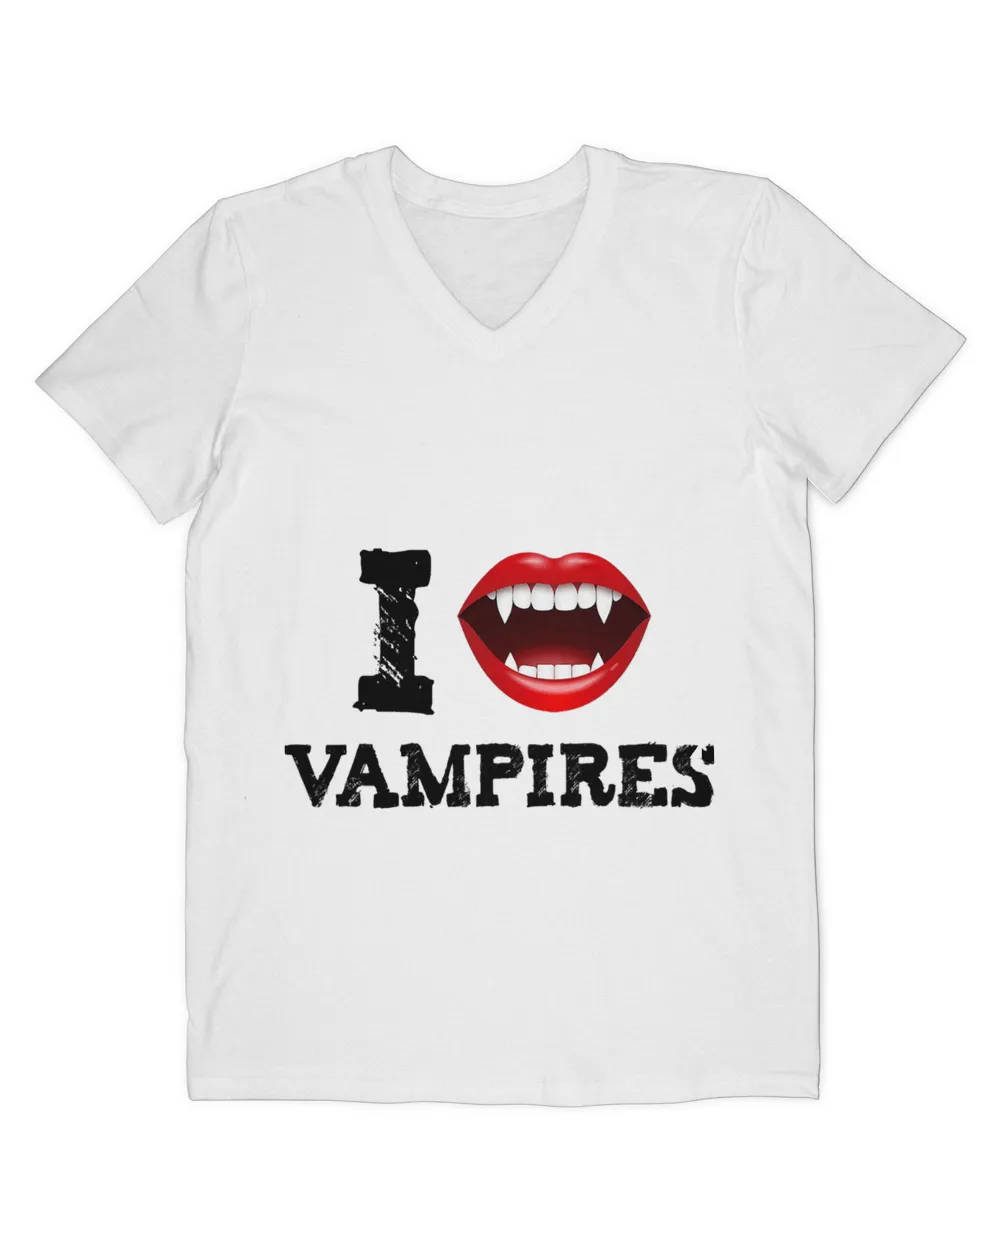 I Love Vampires Funny Bat Bloodsucker Vamp